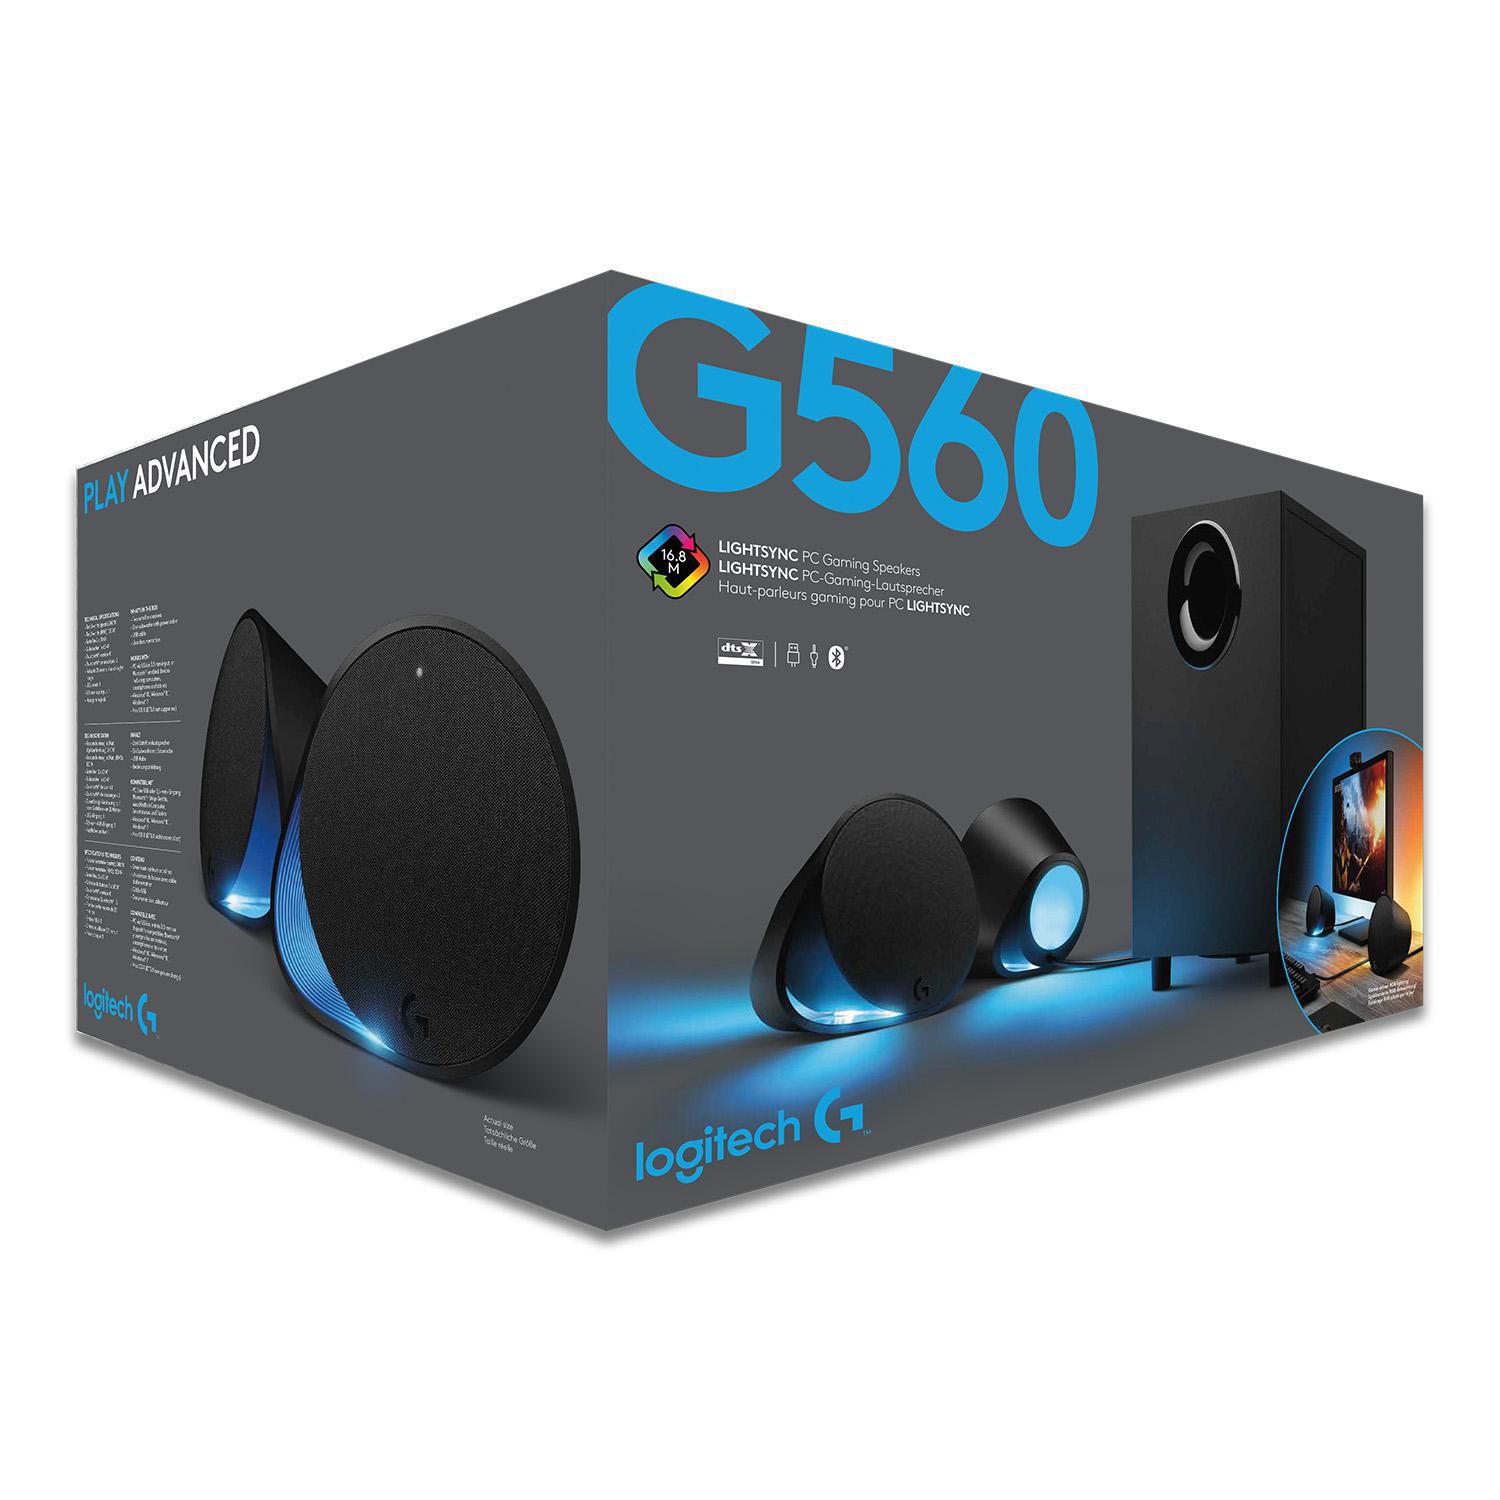 Logitech G560 LIGHTSYNC Bluetooth Gaming Speakers 